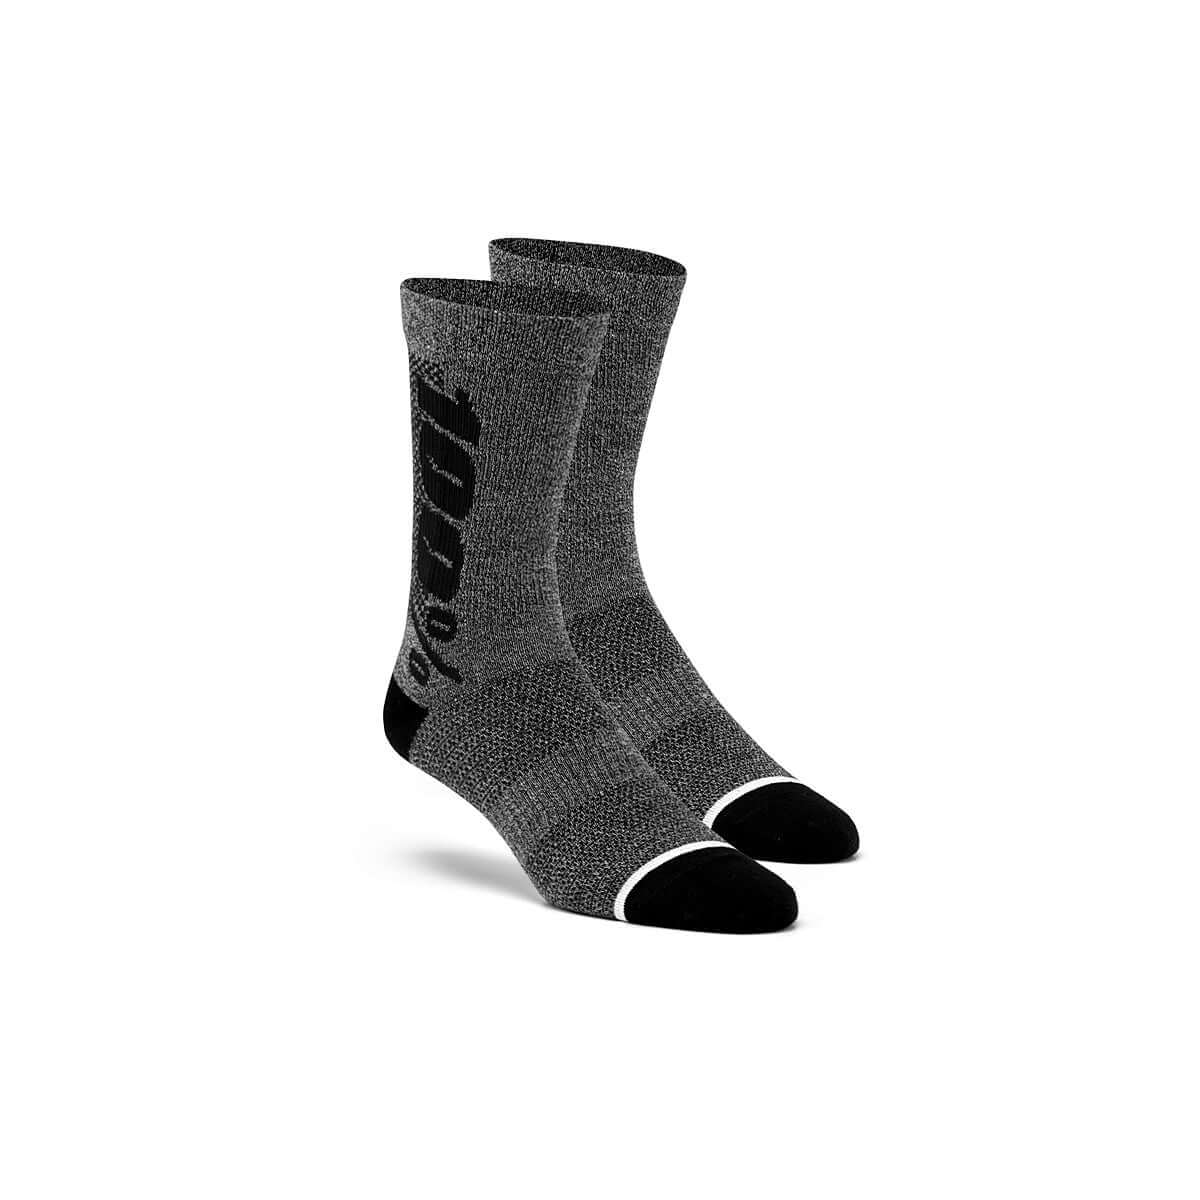 100% Rythym Merino Wool Performance Socks Charcoal Heather L\XL Bike Socks